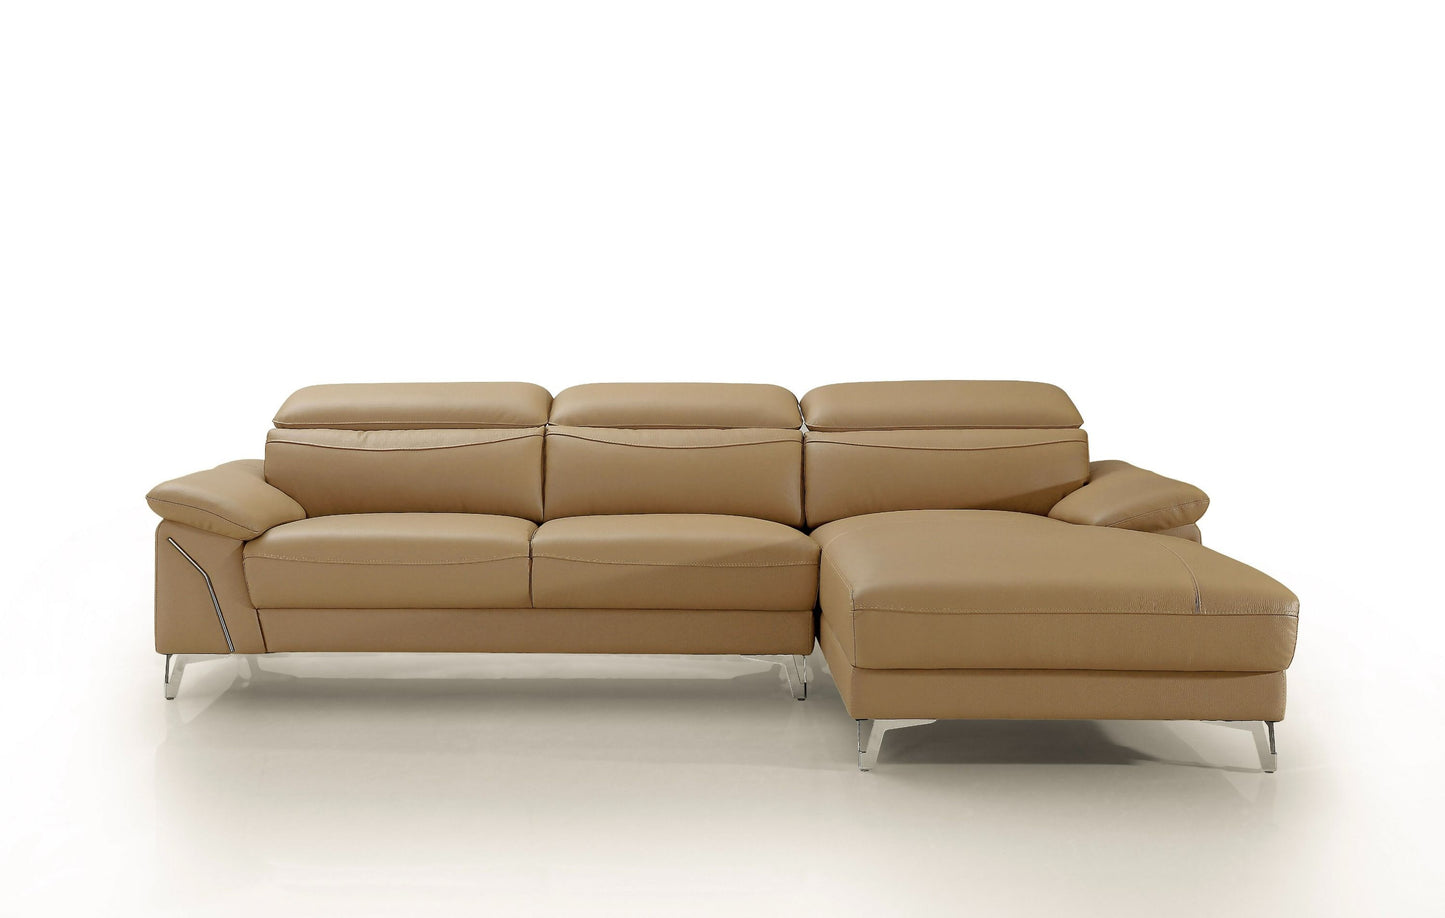 Divani Casa Sura Modern Camel Leather Right Facing Sectional Sofa - New